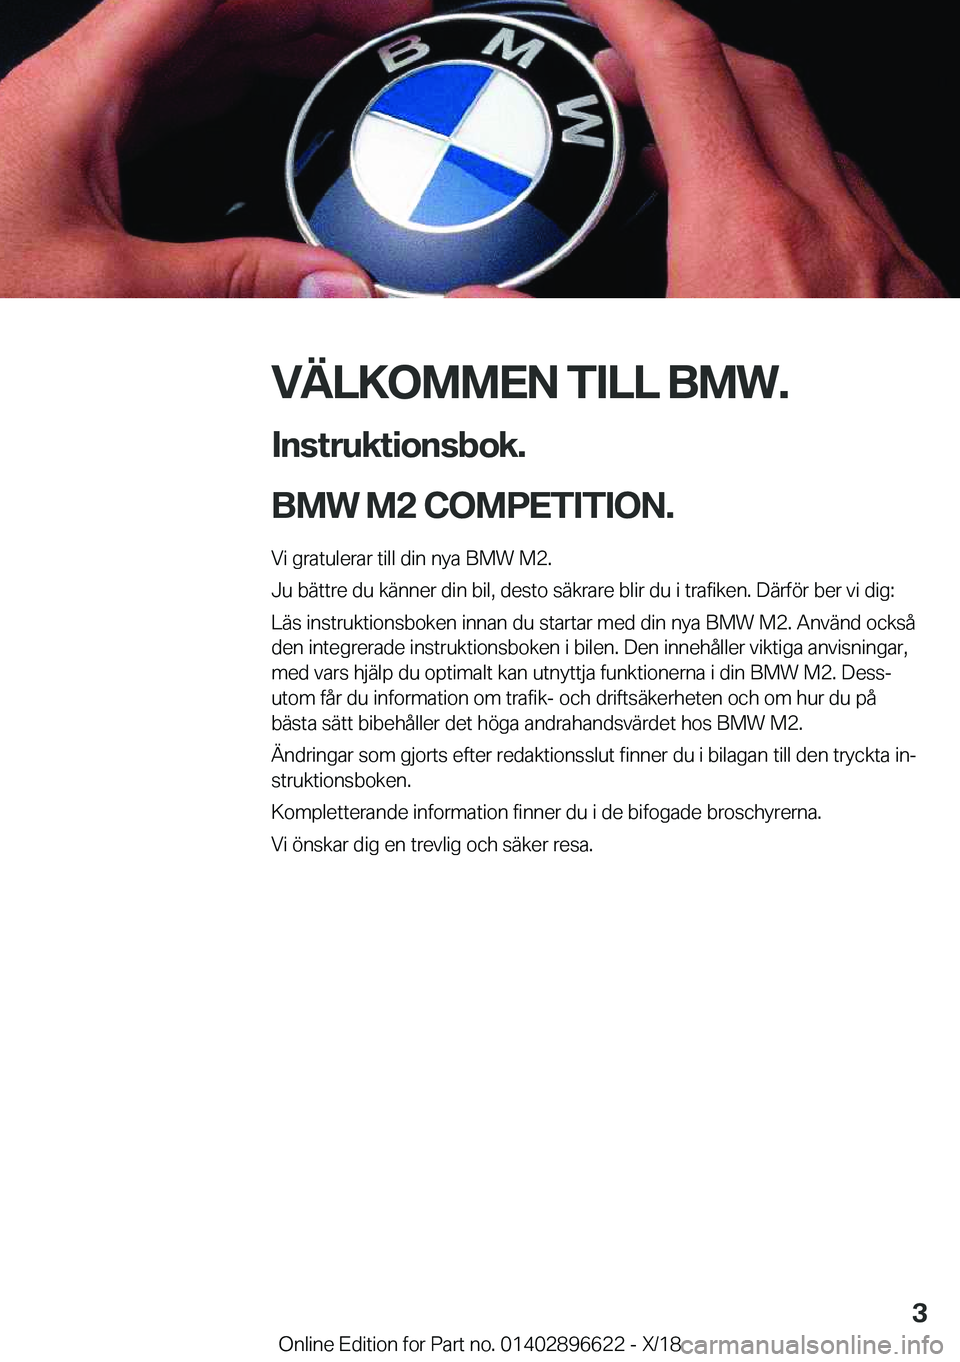 BMW M2 2019  InstruktionsbÖcker (in Swedish) �V�Ä�L�K�O�M�M�E�N��T�I�L�L��B�M�W�.�I�n�s�t�r�u�k�t�i�o�n�s�b�o�k�.
�B�M�W��M�2��C�O�M�P�E�T�I�T�I�O�N�.�
�V�i��g�r�a�t�u�l�e�r�a�r��t�i�l�l��d�i�n��n�y�a��B�M�W��M�2�.
�J�u��b�ä�t�t�r�